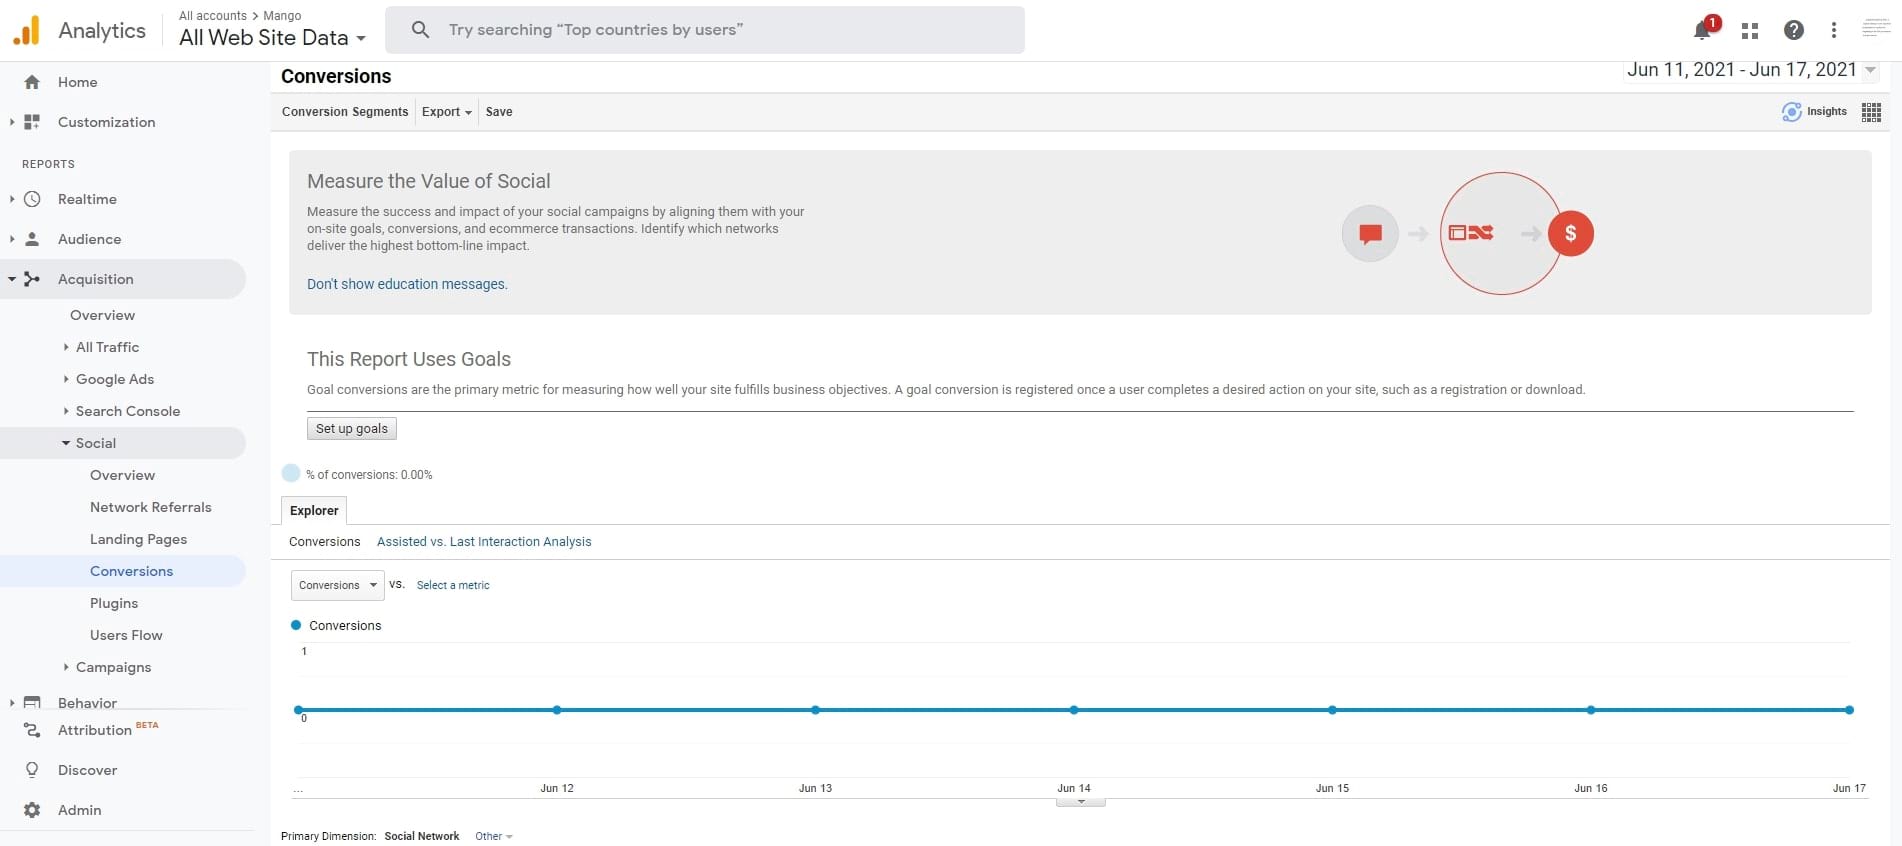 Google Analytics, one of the best ways to track social media analytics